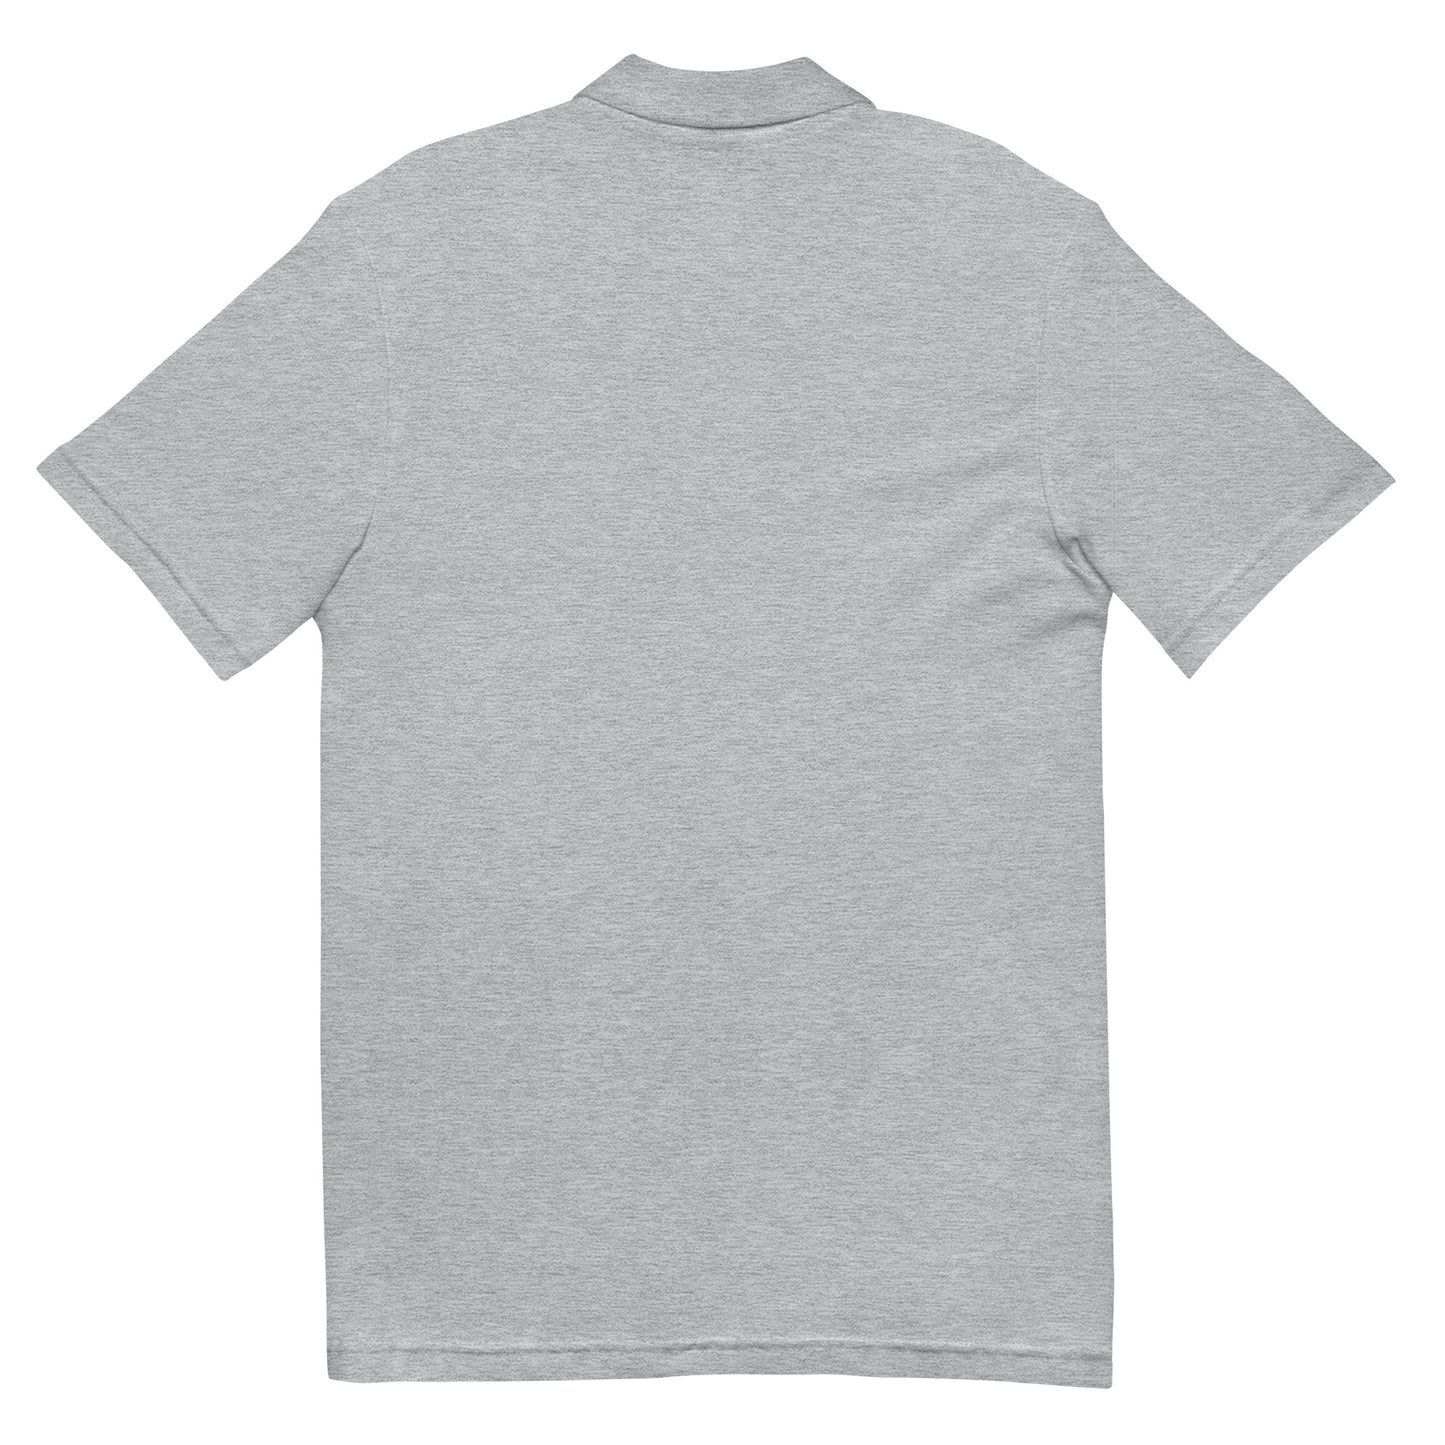 Robb Industrial Corporation pique polo shirt (sport grey)